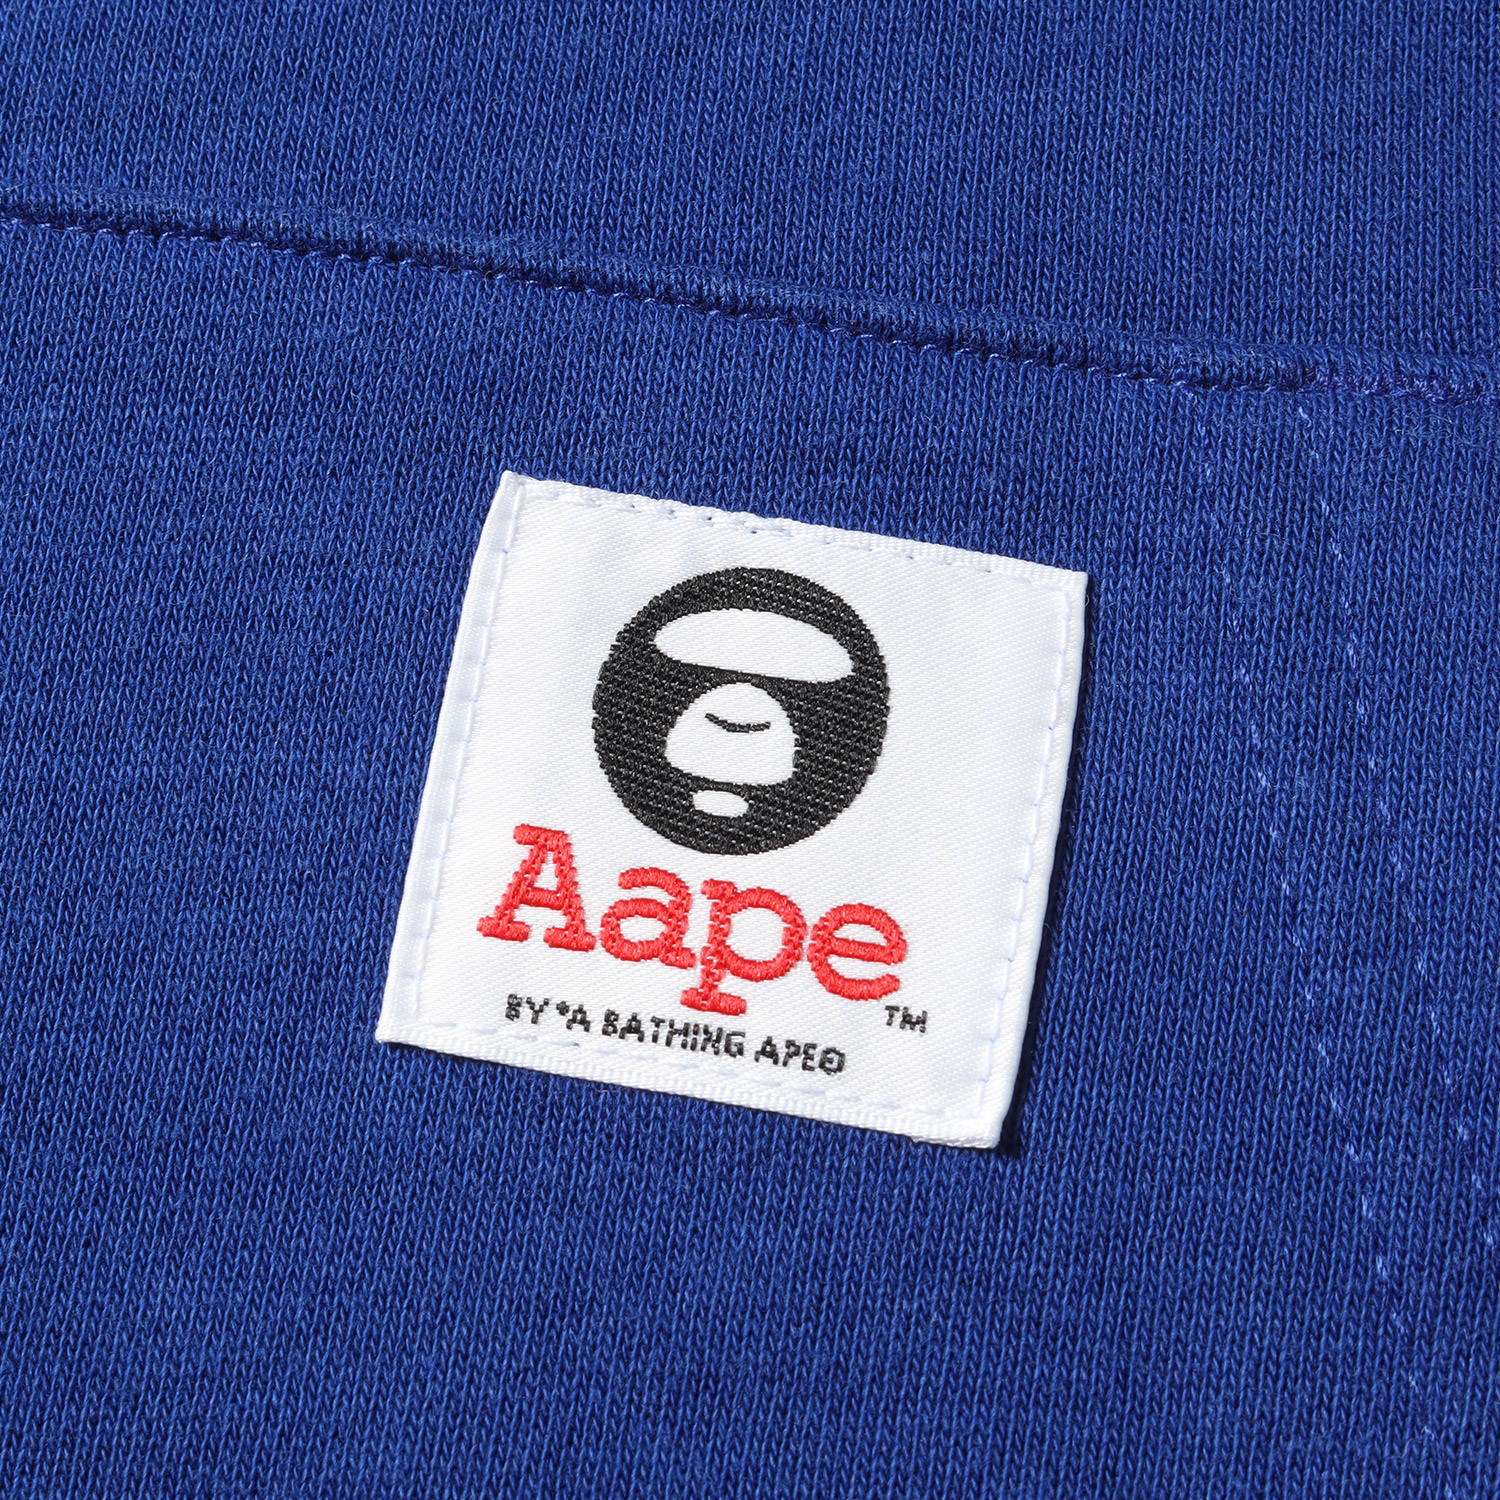 A BATHING APE ア ベイシング エイプ パーカー AAPE BY A BATHING APE 猿顔ワッペン スウェットパーカー ブルー L  トップス フーディー 【メンズ】【中古】【K3783】 | ブランド古着のBEEGLE by Boo-Bee